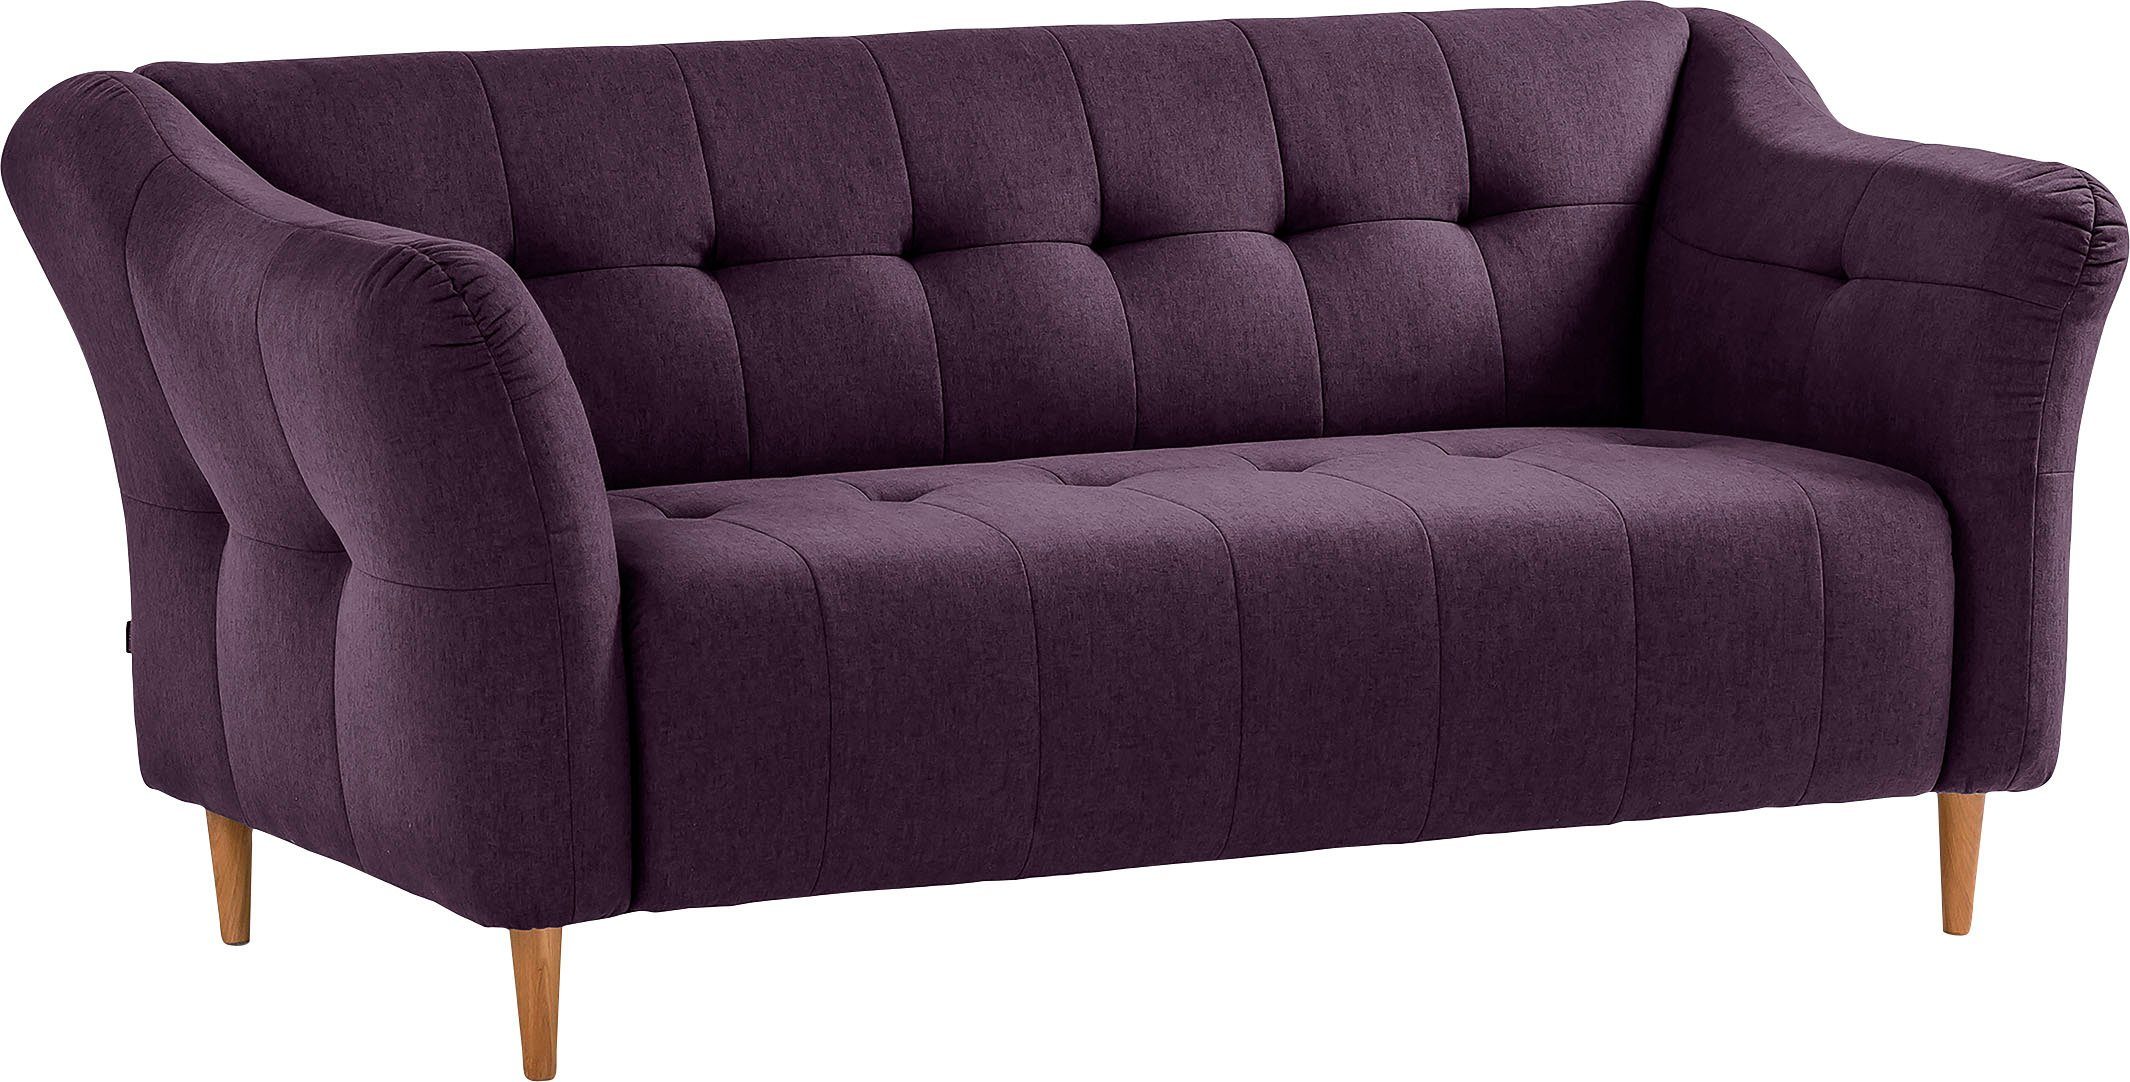 im sofa mit Soraya, stellbar exxpo Holzfüßen, Raum frei - 3-Sitzer fashion